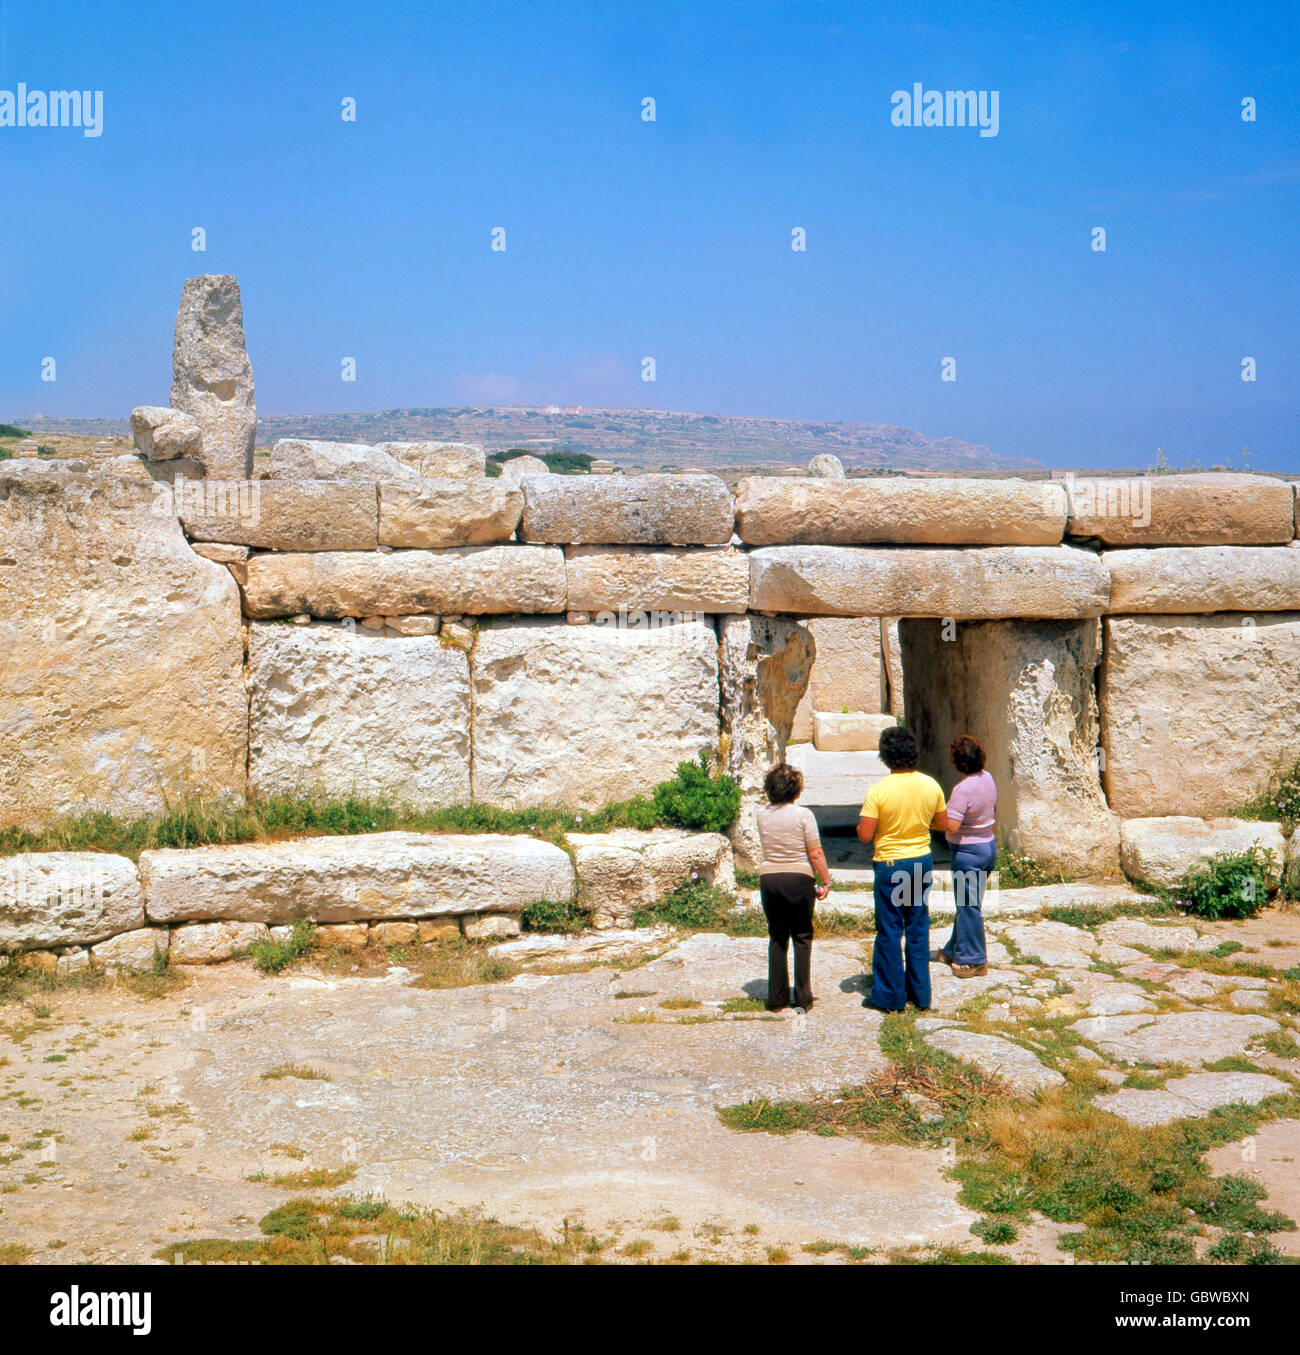 Reise nach Malta. Tempelanlage von Tarxien. Viaggiare a Malta, Templi di Tarxien. 1975 Foto Stock